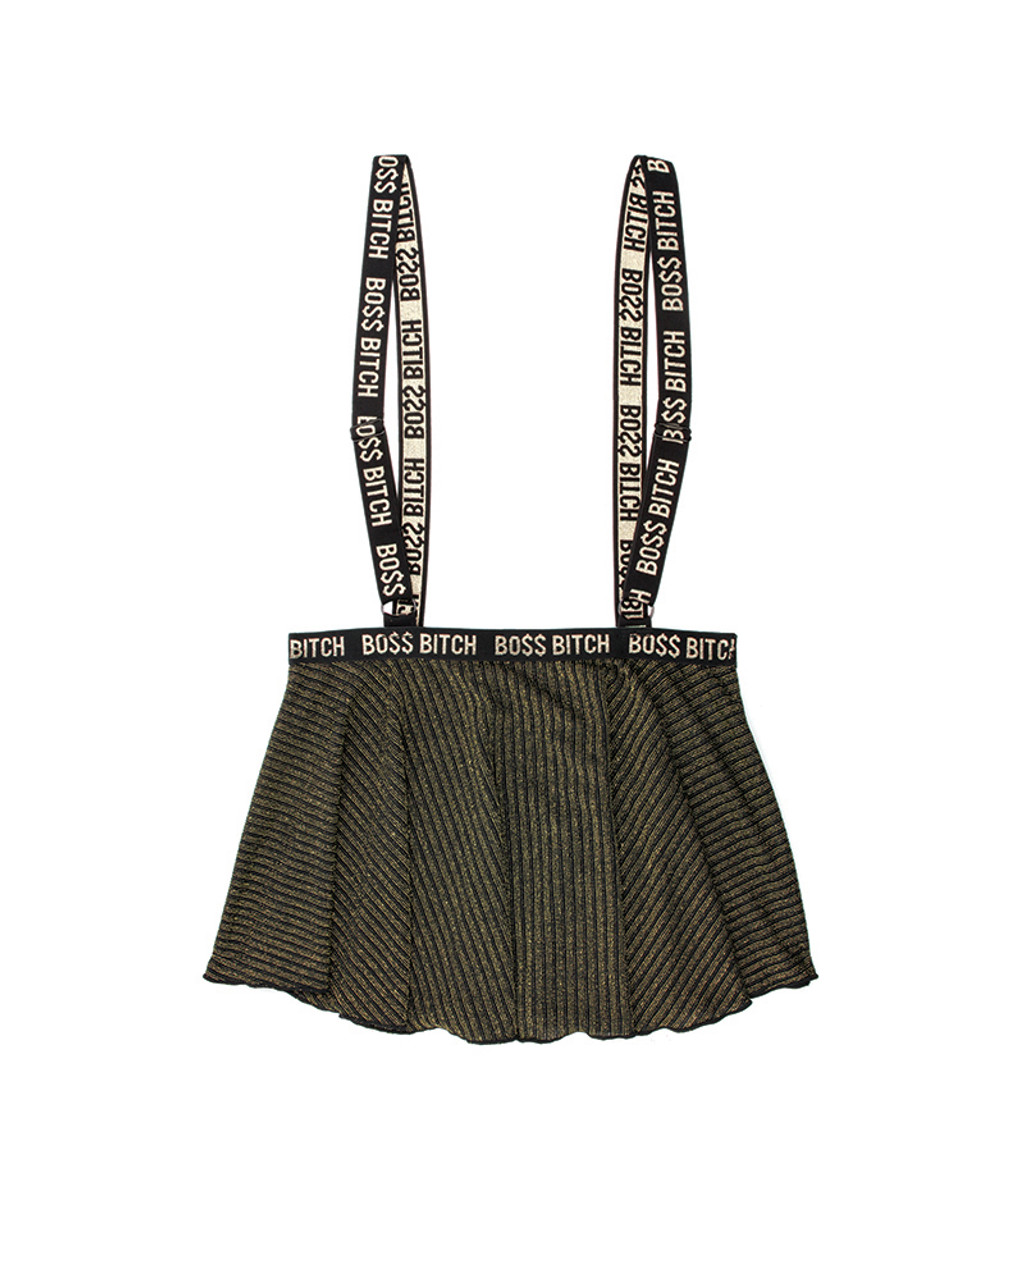 Vibes "Bo$$ Bitch" Suspender Skirt